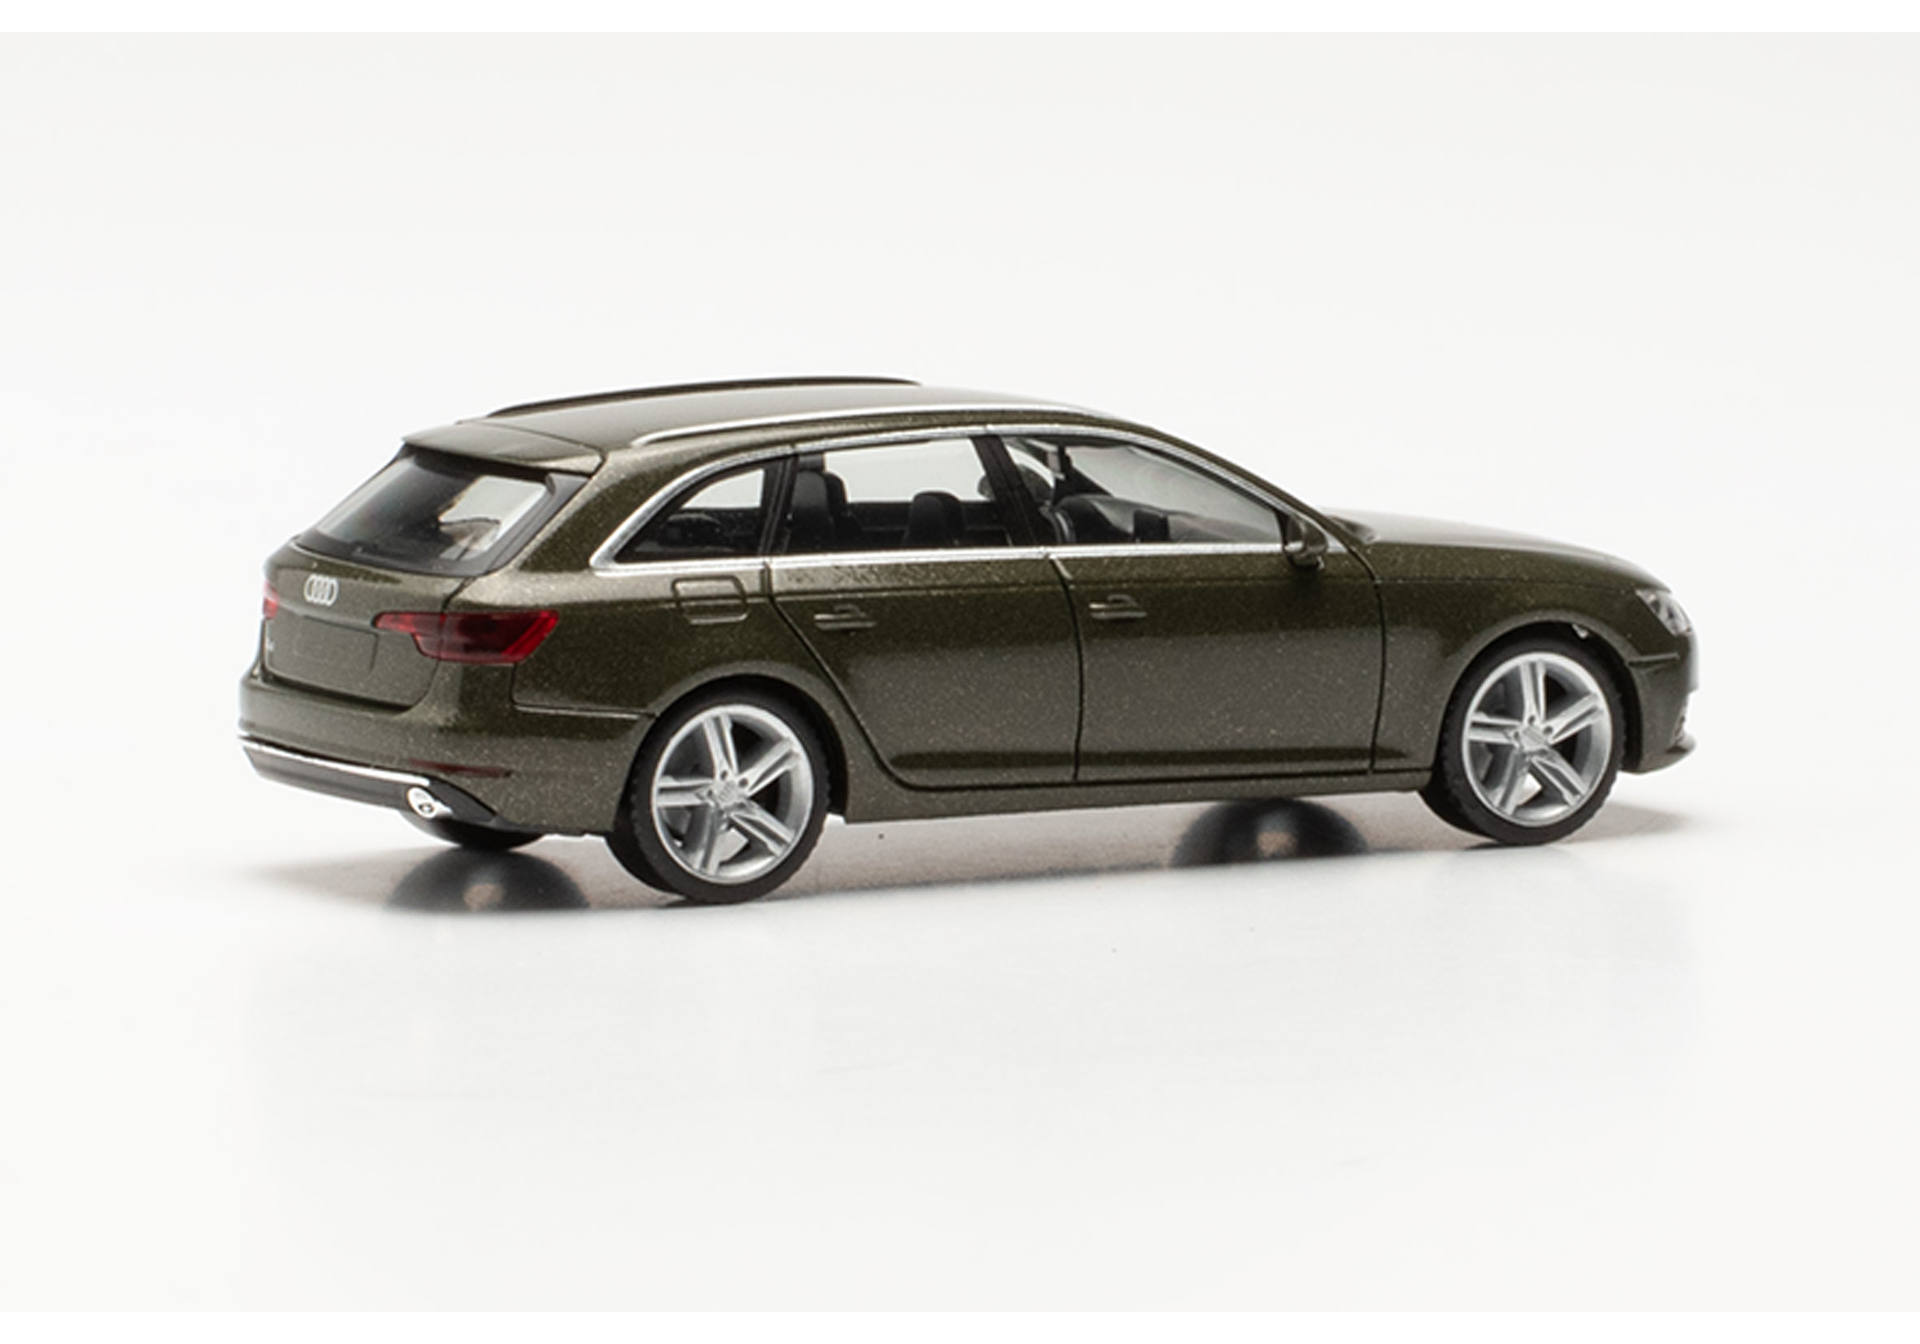 Herpa Audi A4 Avant, distriktgrün metallic 038577-004